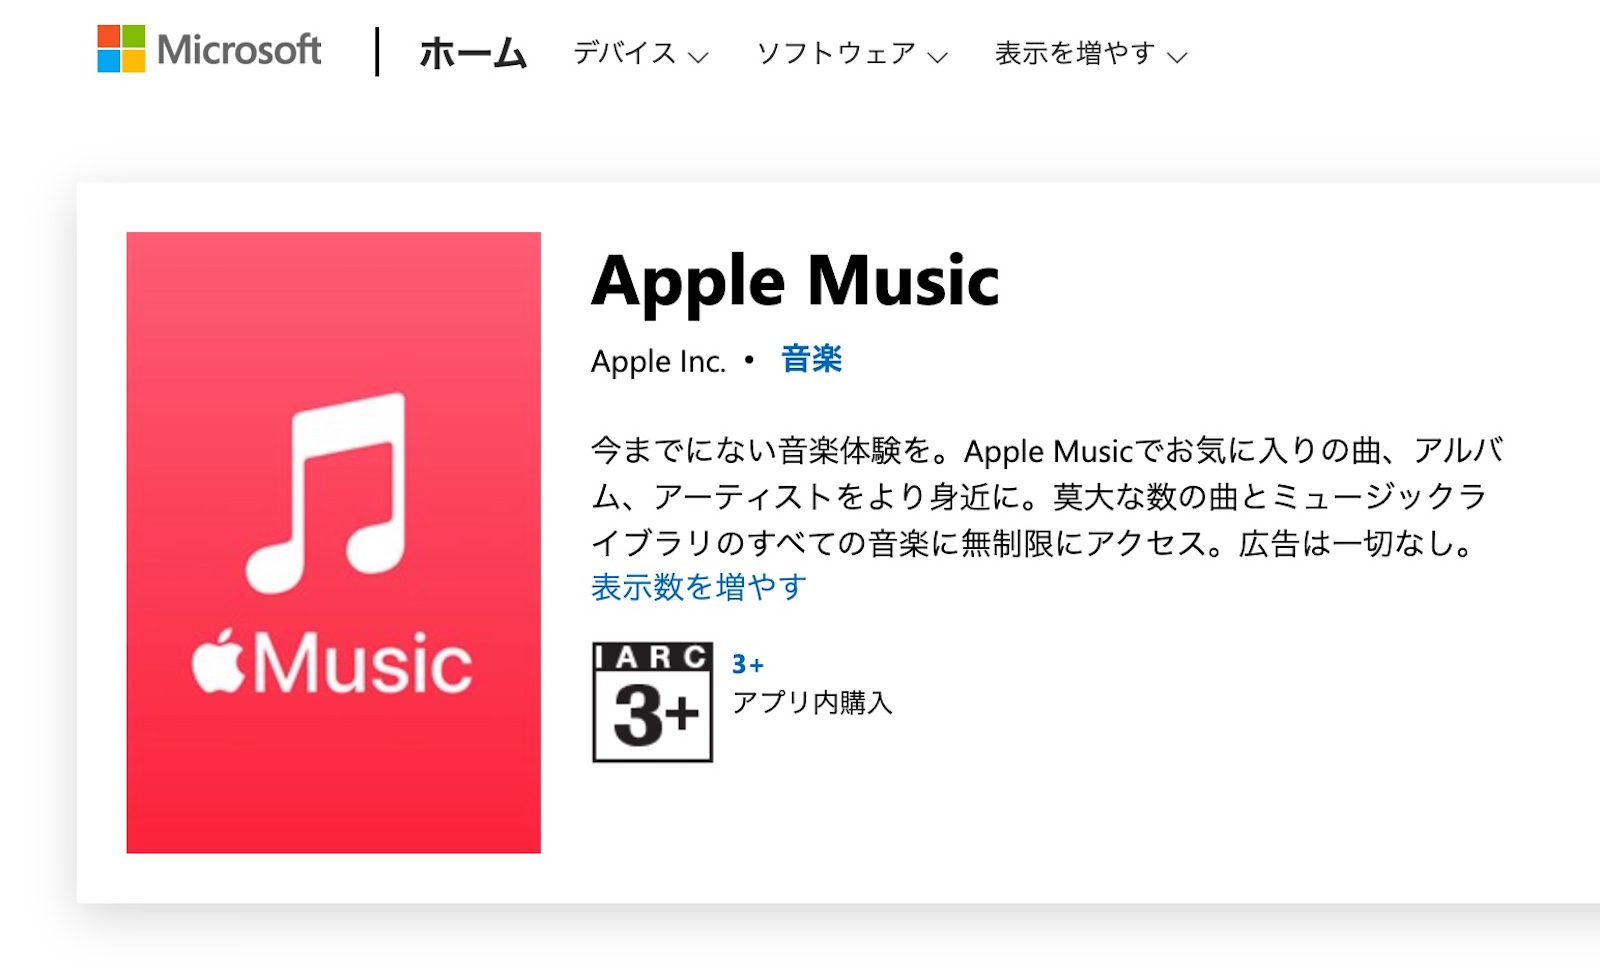 Apple Music on Windows Store